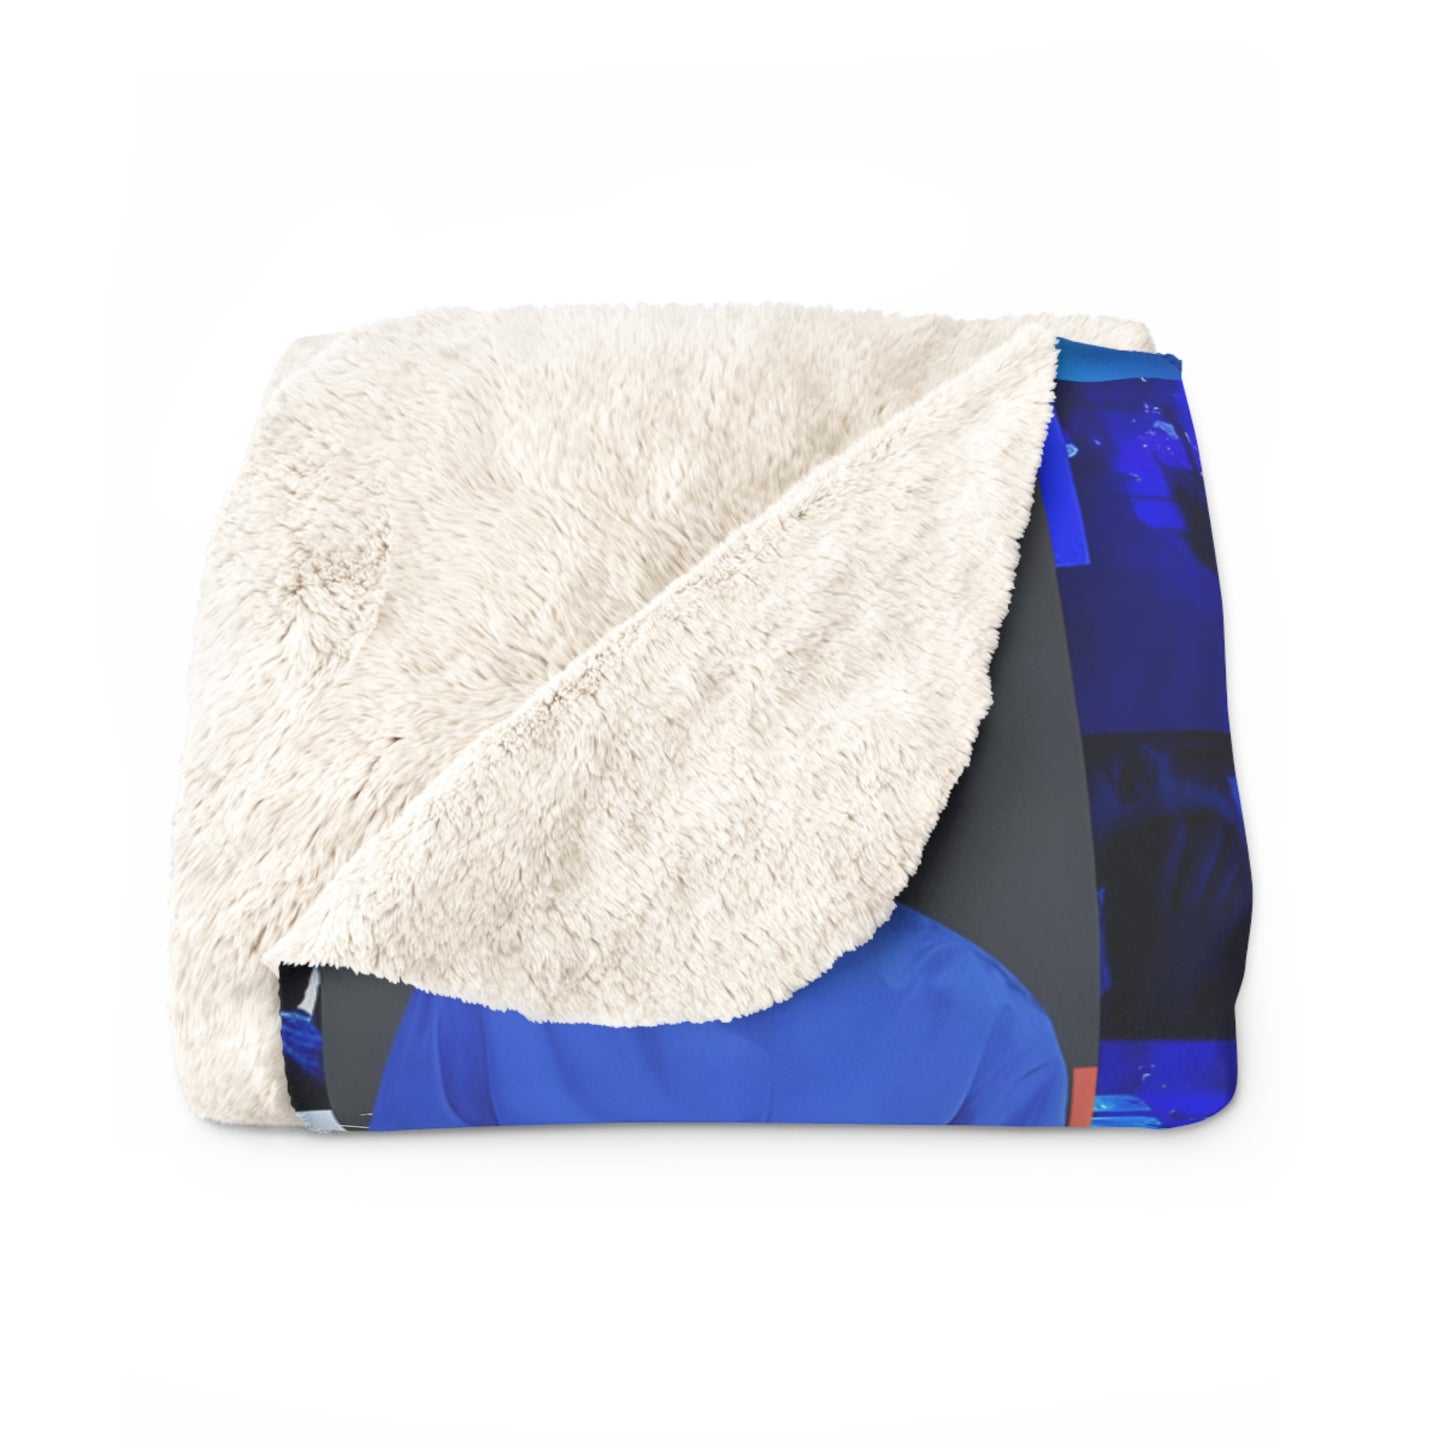 Timothee Chalamet Cool Blue Collage Sherpa Fleece Blanket